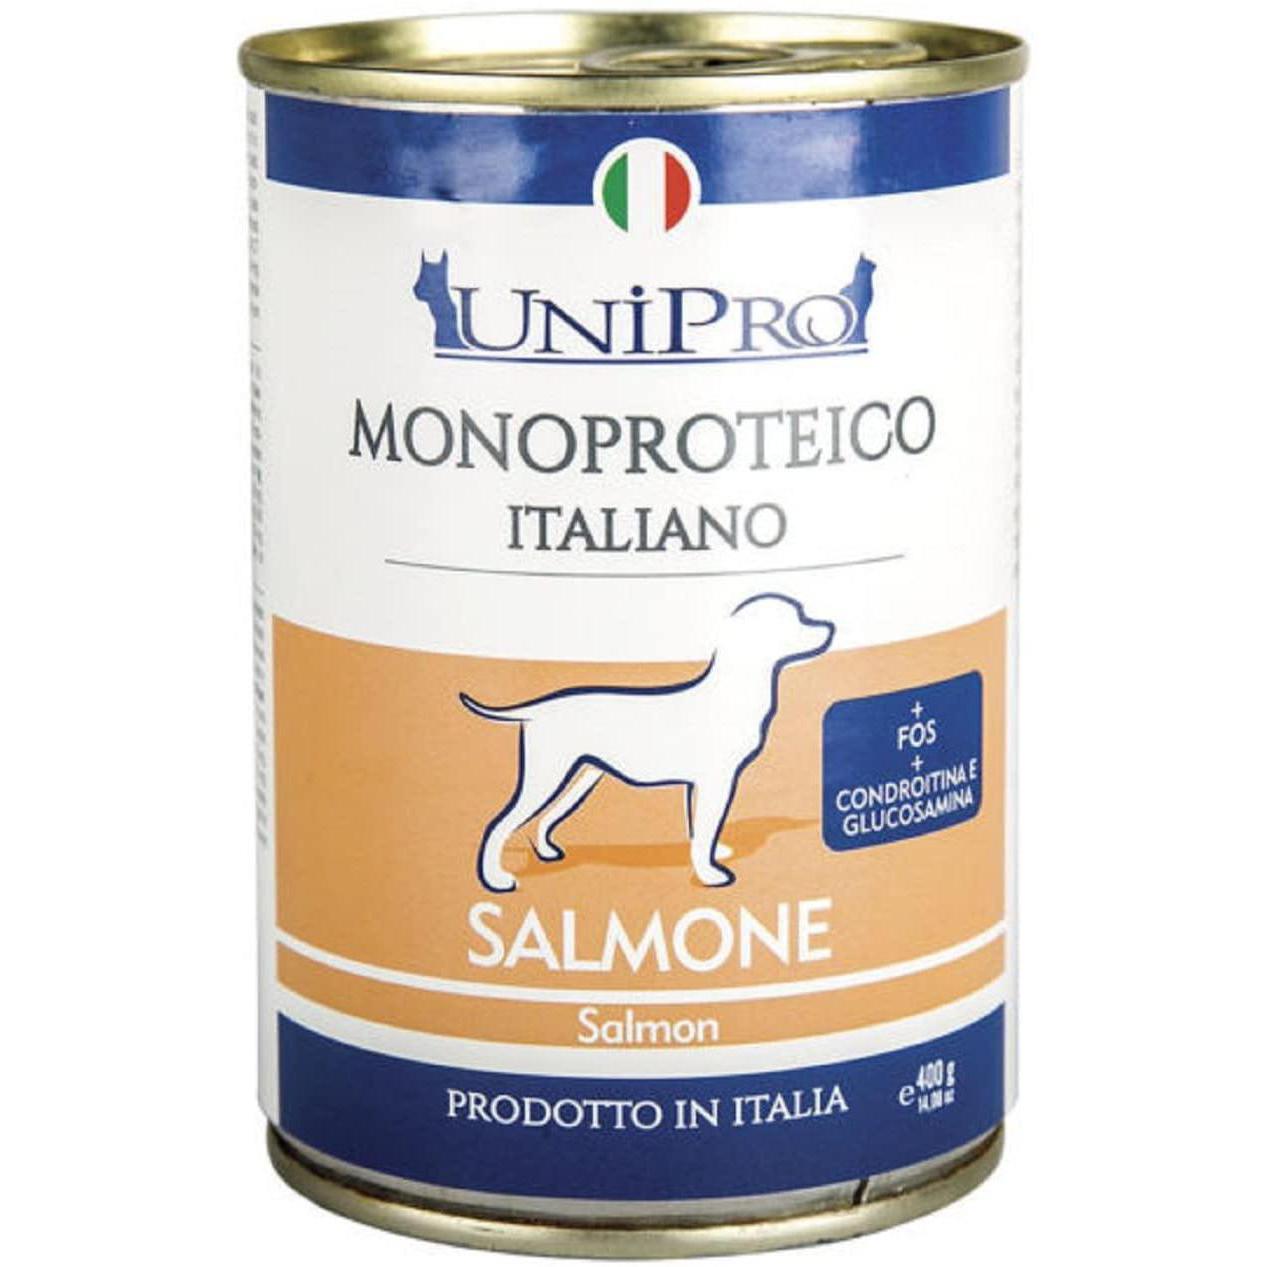 Unipro Unicamente Salmone 400r Monoproteico Lattina